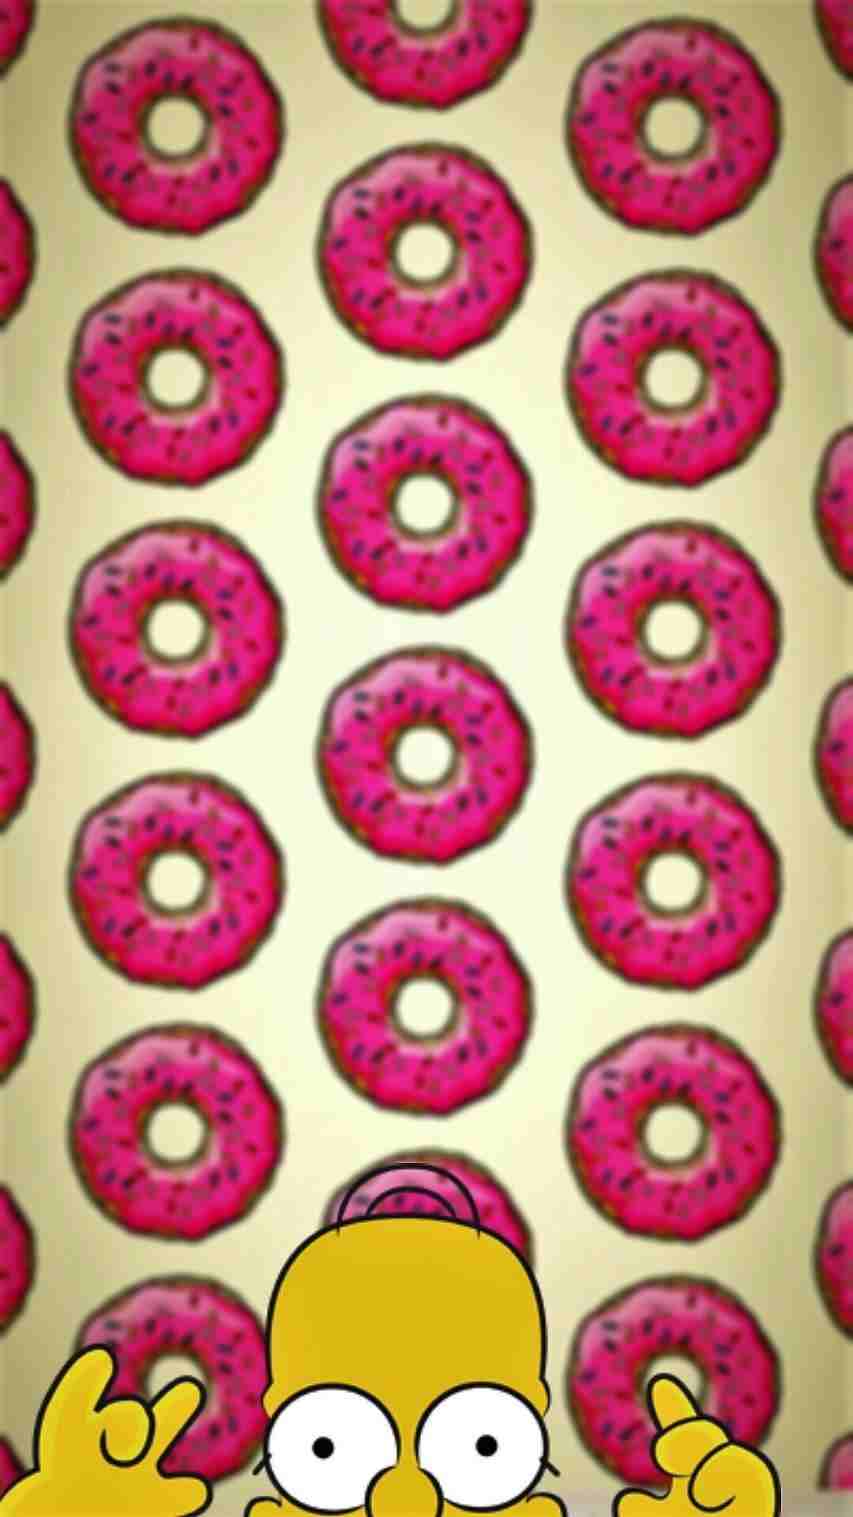 Download 920 Koleksi Background Tumblr Donut Gratis